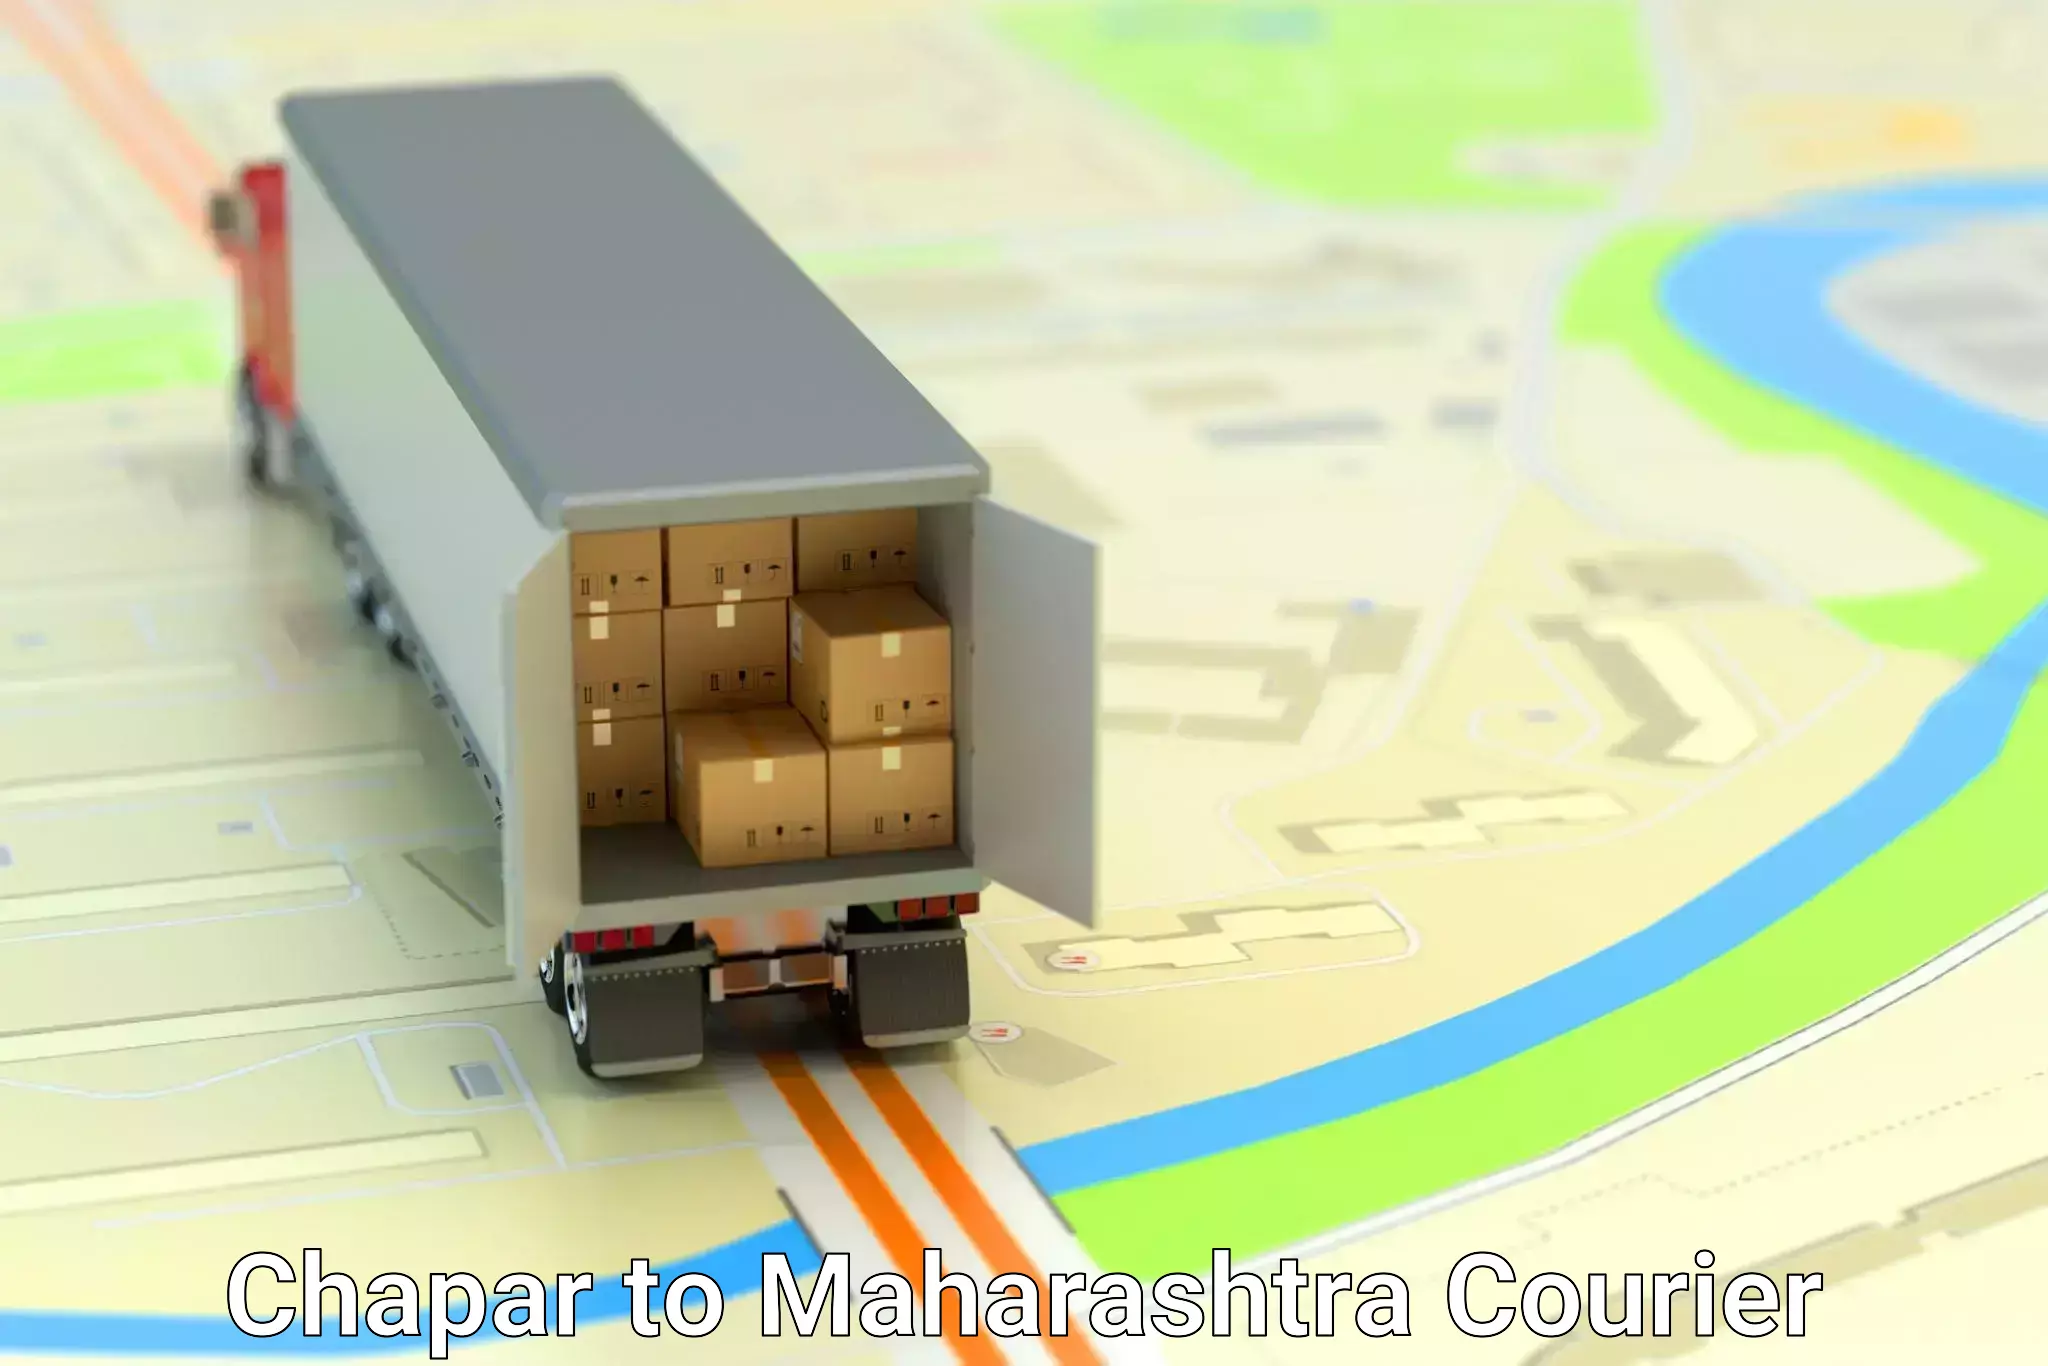 Global shipping networks Chapar to Maharashtra